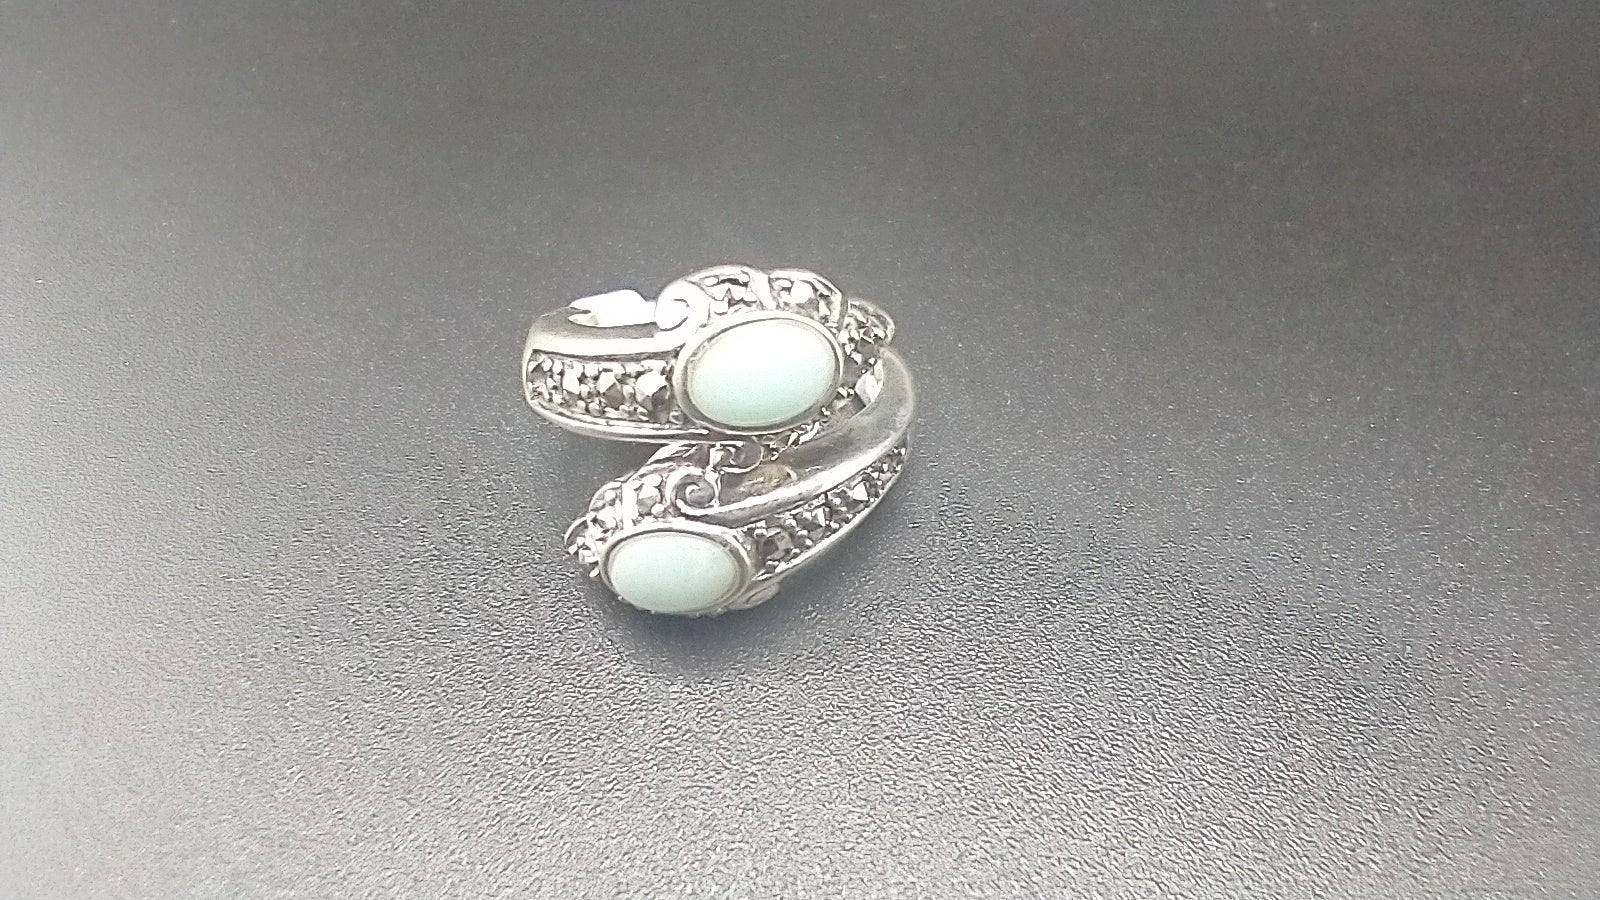 "ZEEL" Marcasite powder blue stone 925 sterling silver ring size 7....$75.